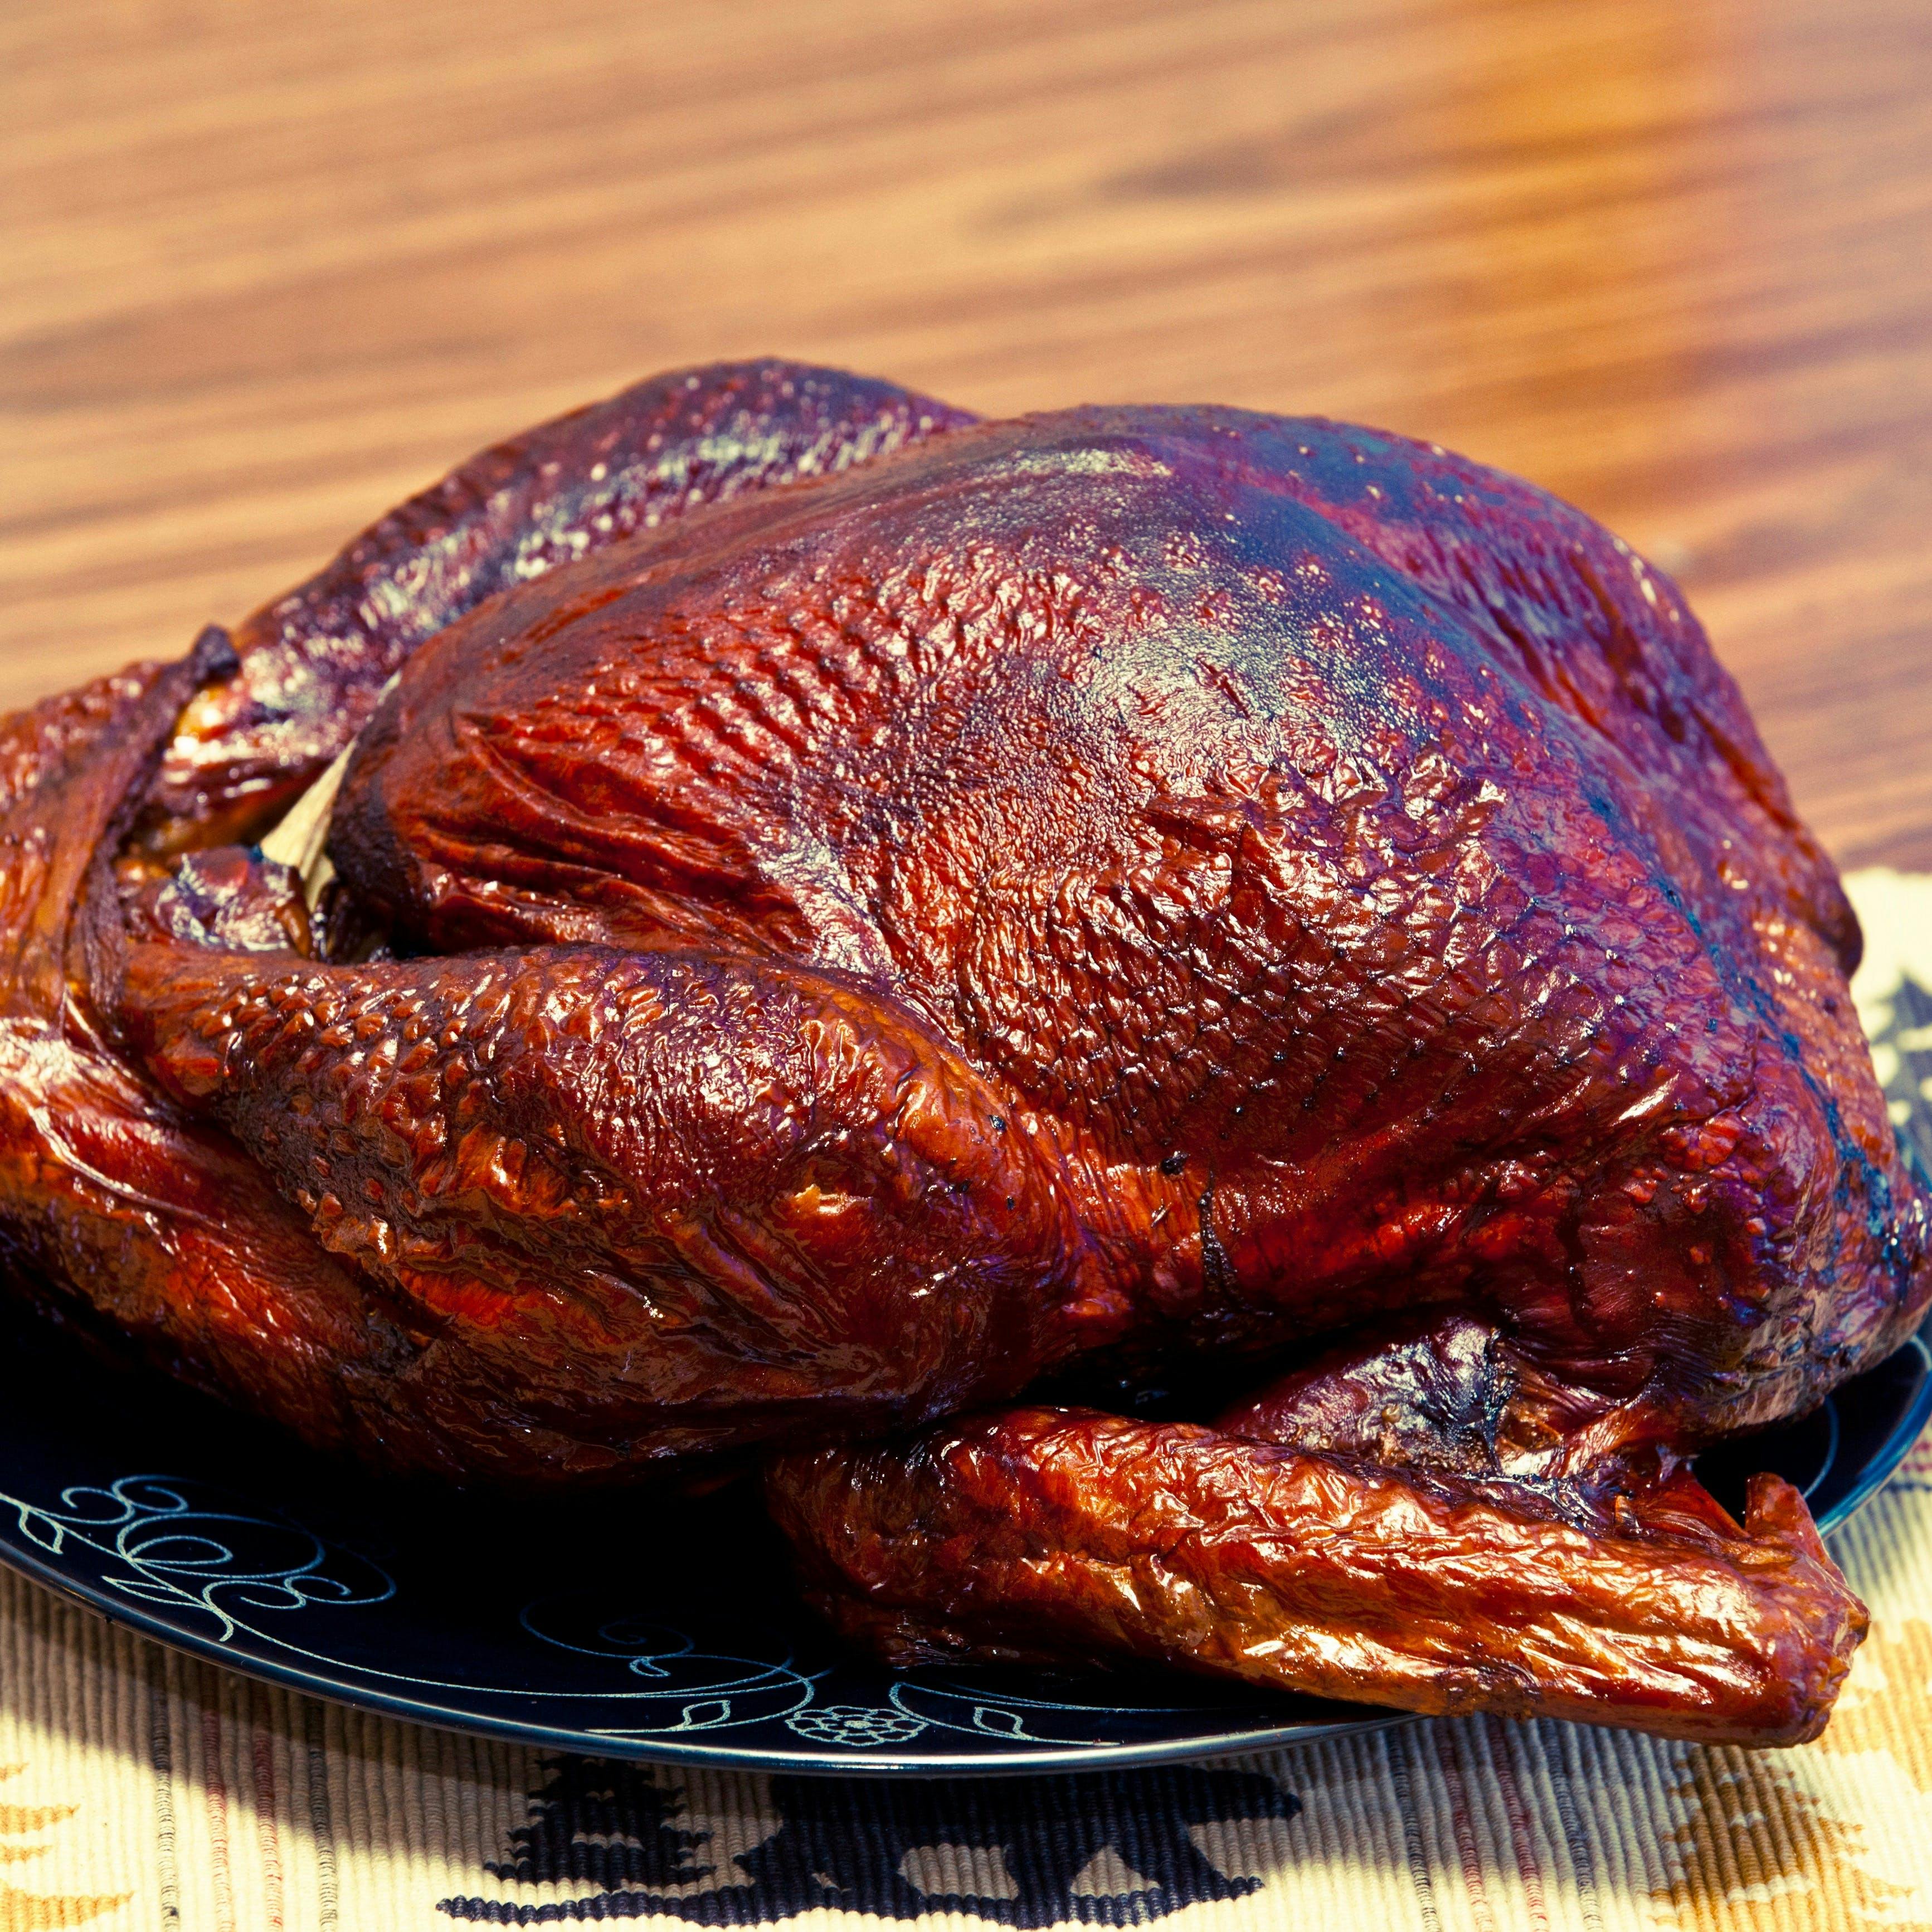 Whole Smoked Turkey